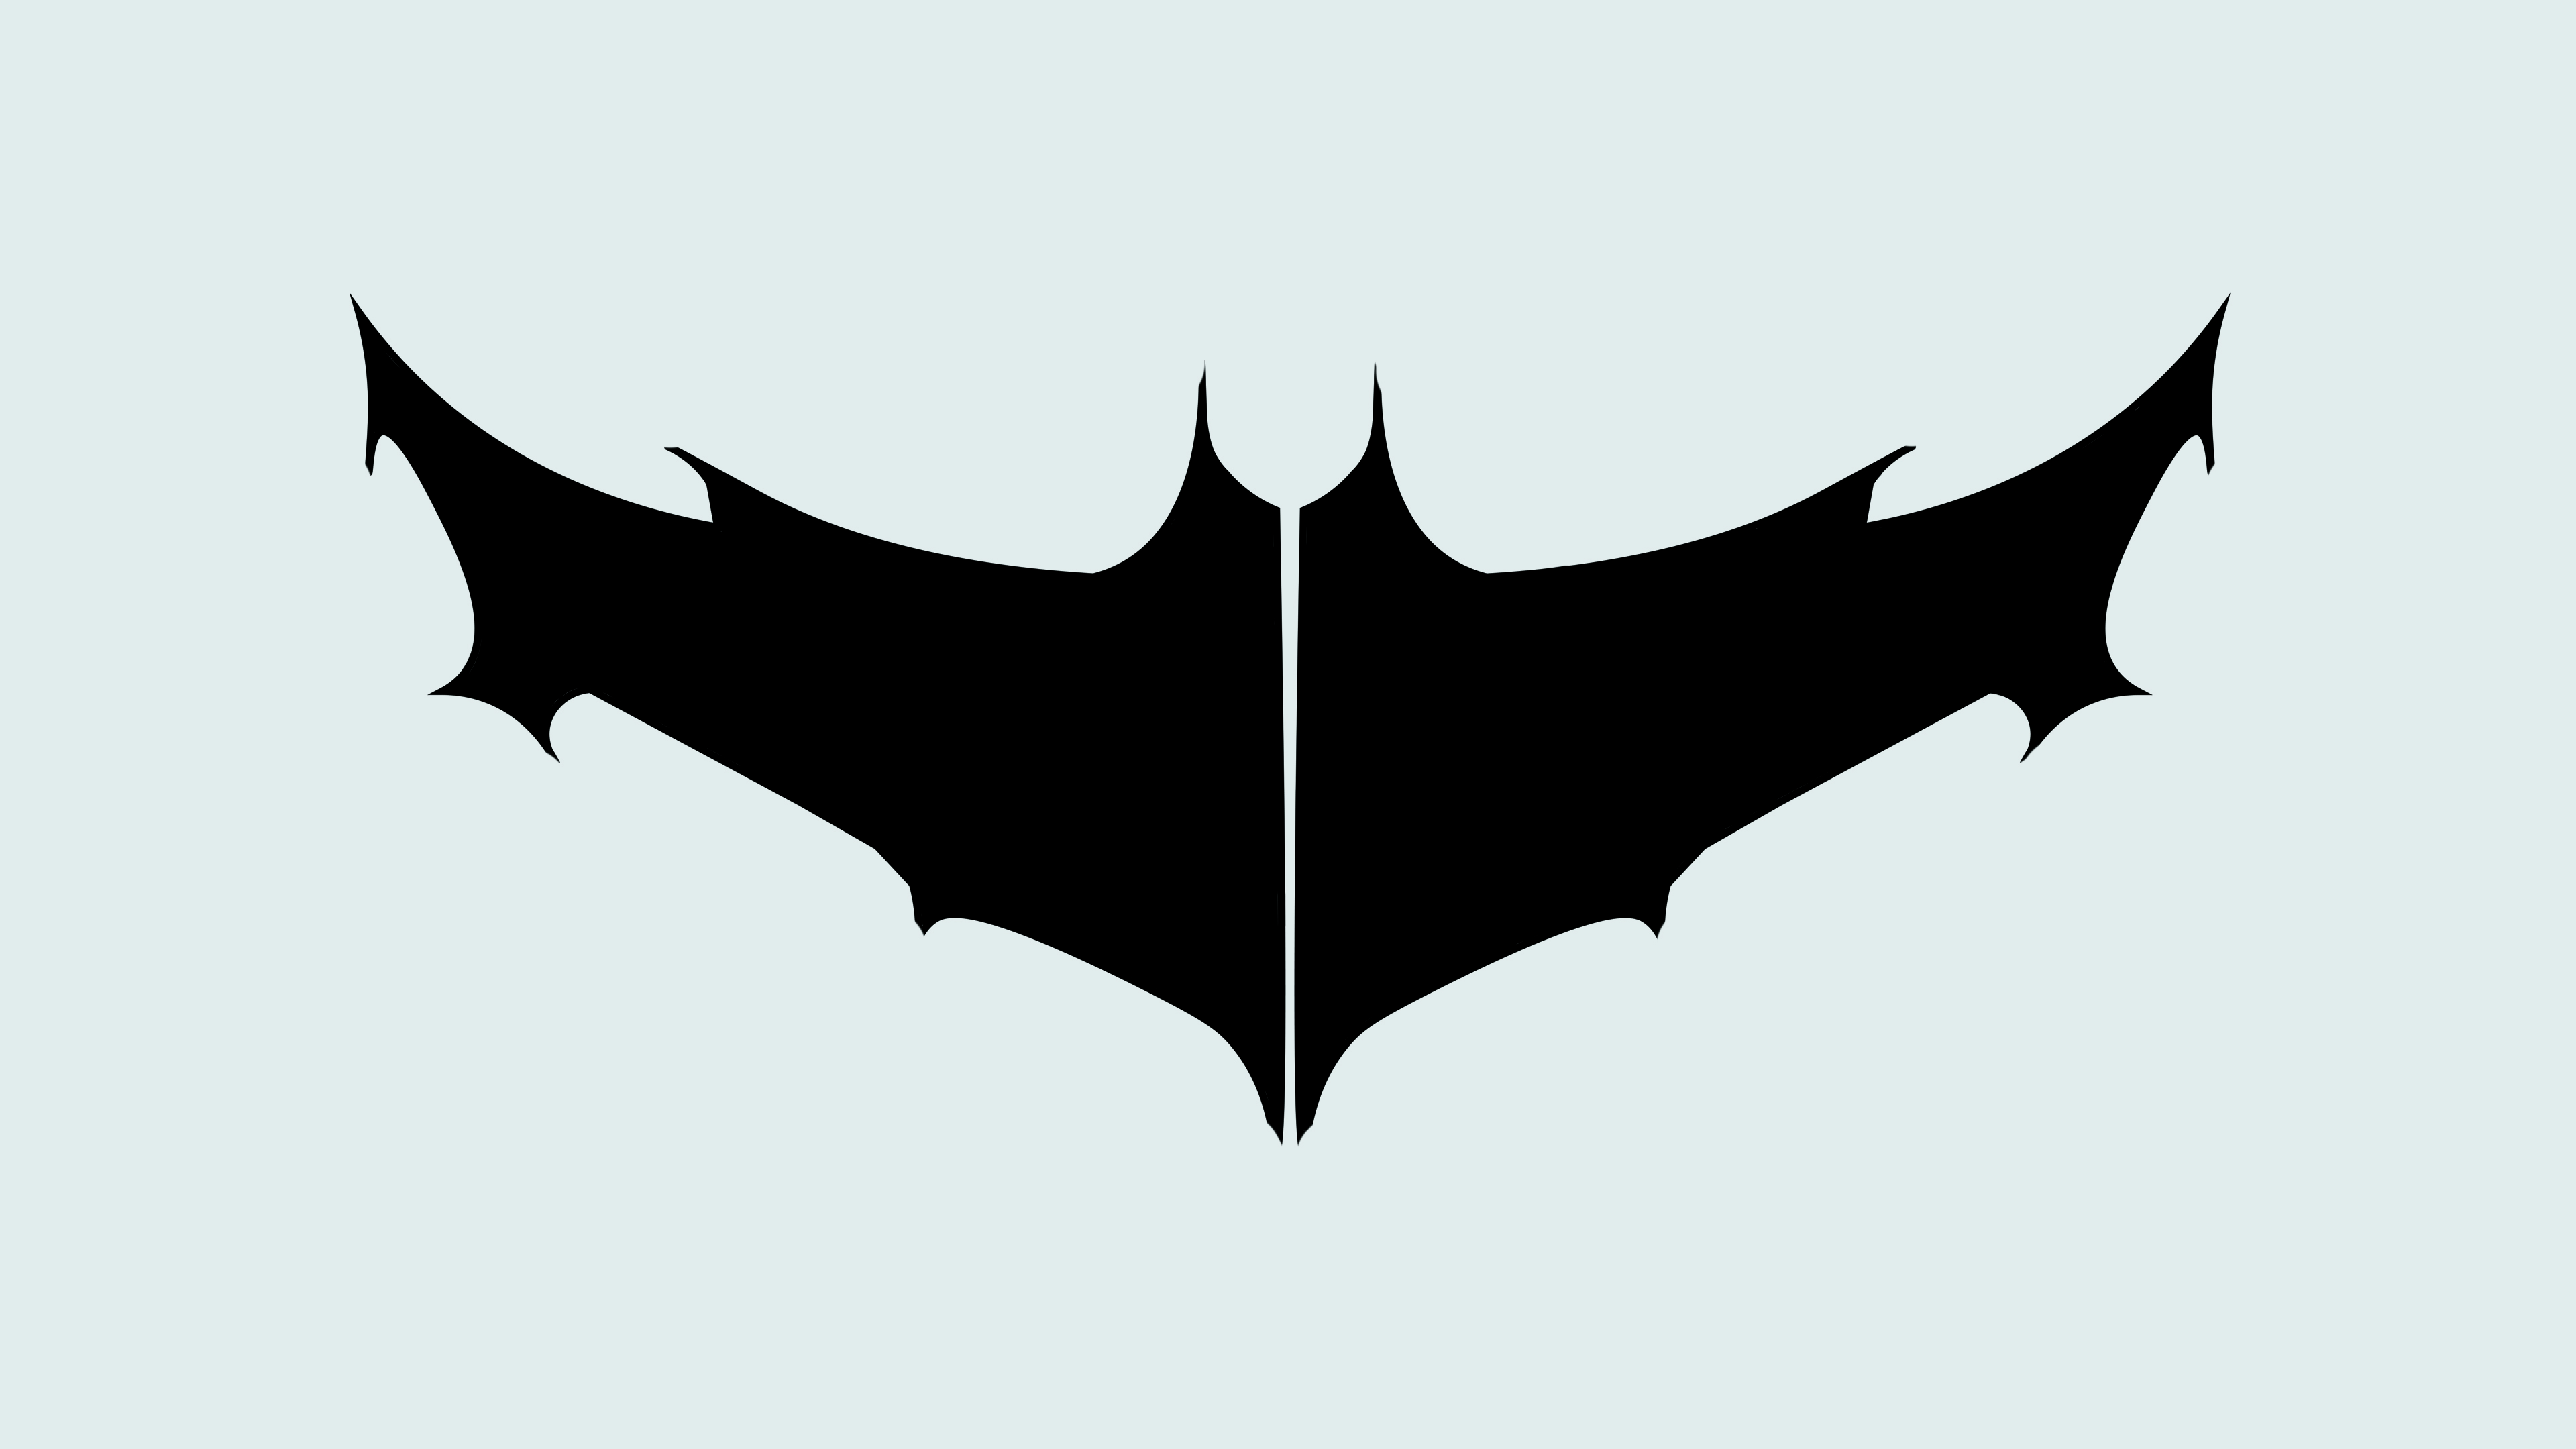 General 3840x2160 Batman DC Comics comic art minimalism black logo bat wings digital art simple background